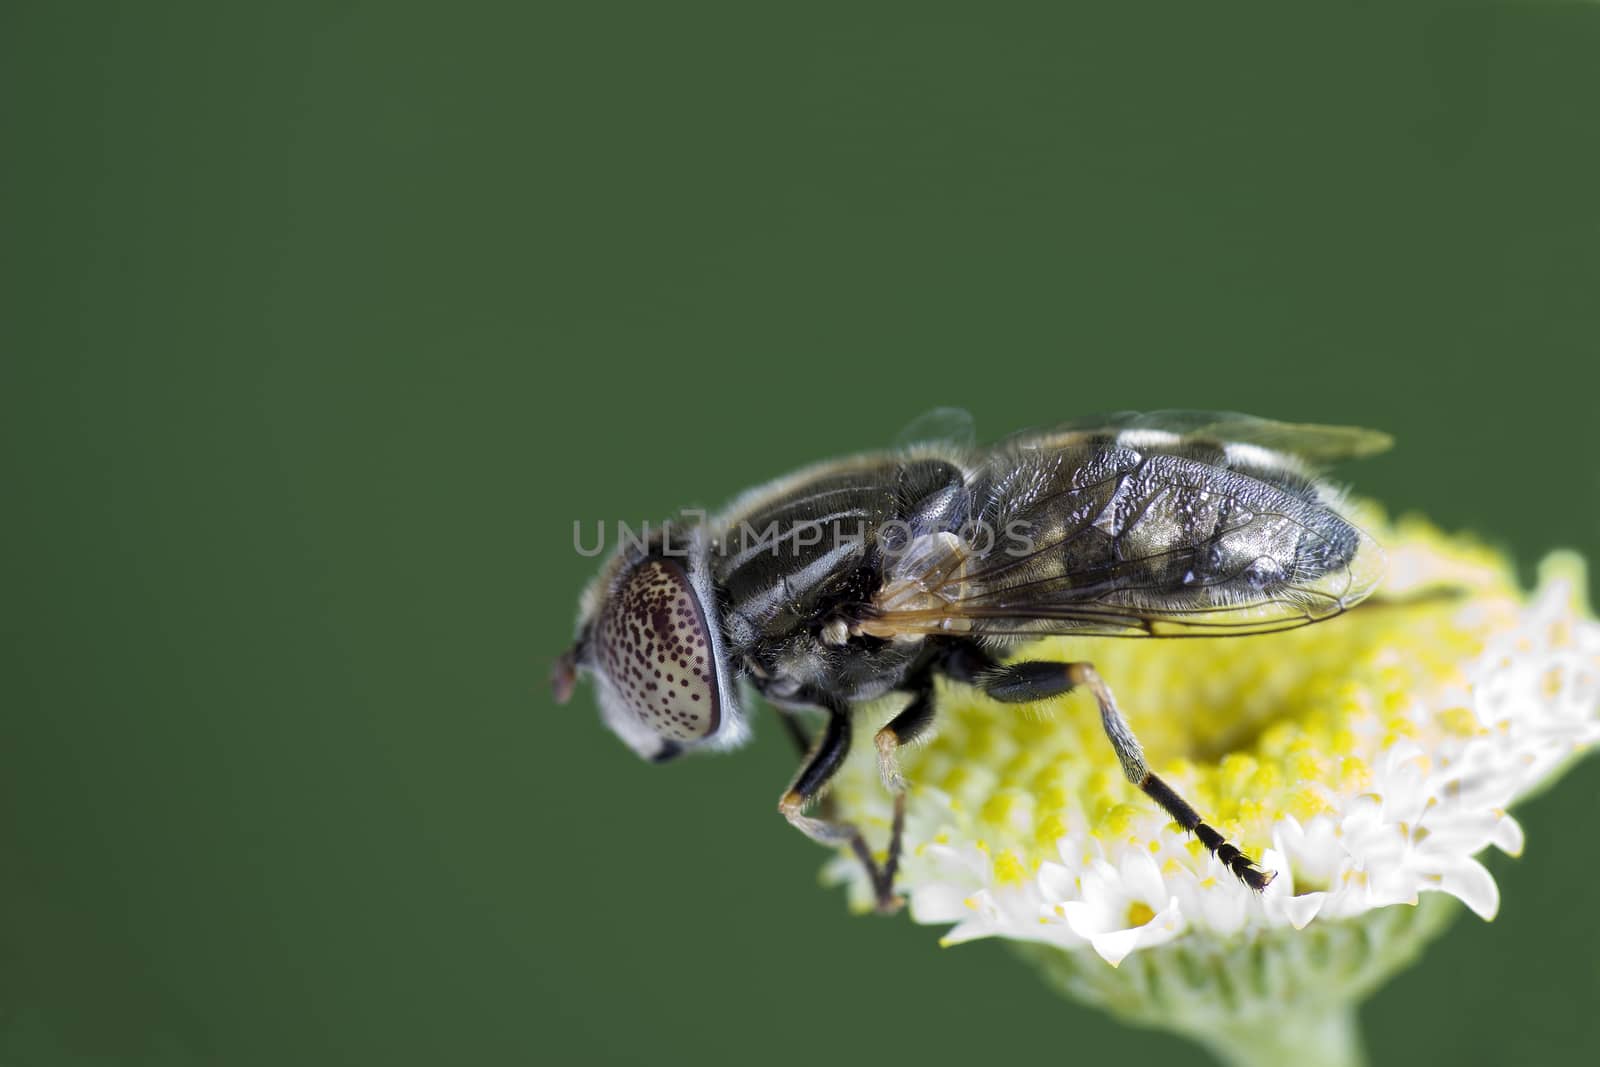 Large spotty-eyed dronefly {Eristalinus aeneus) resting on a white flower, green background